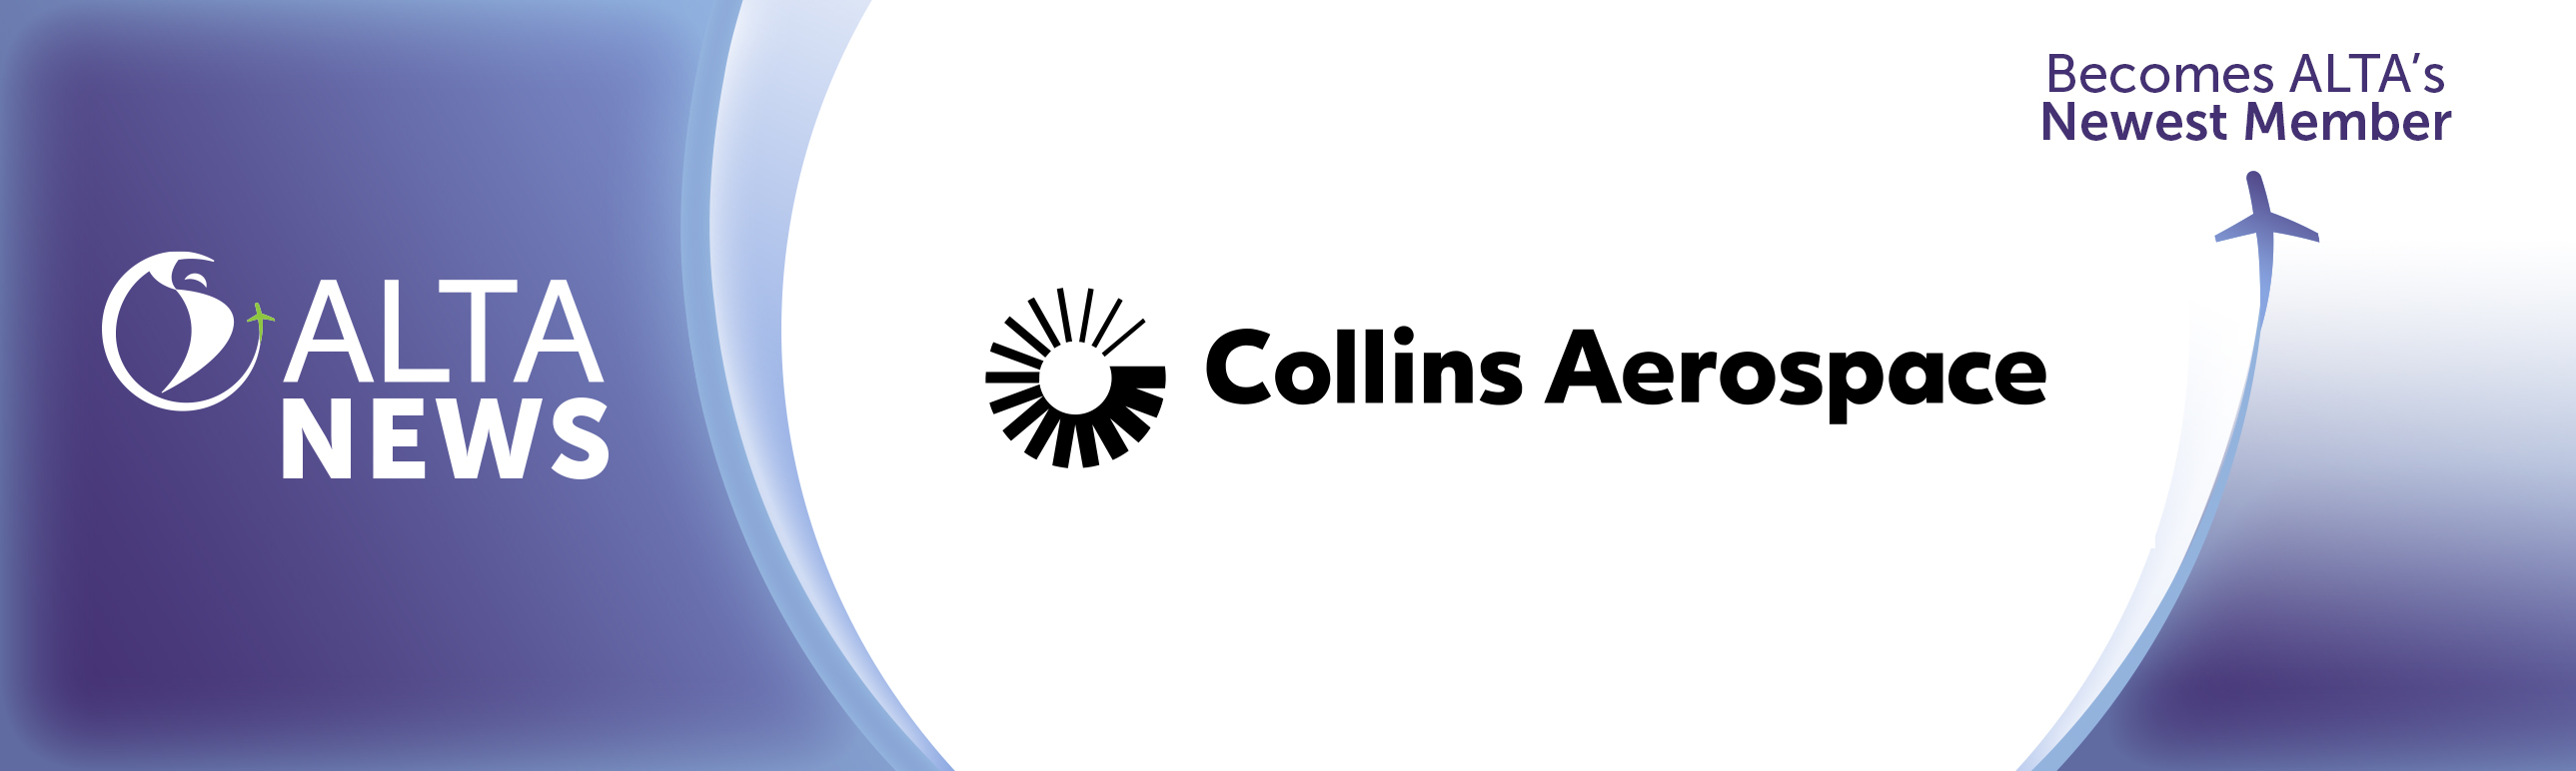 ALTA NEWS - ALTA da la bienvenida a Collins Aerospace